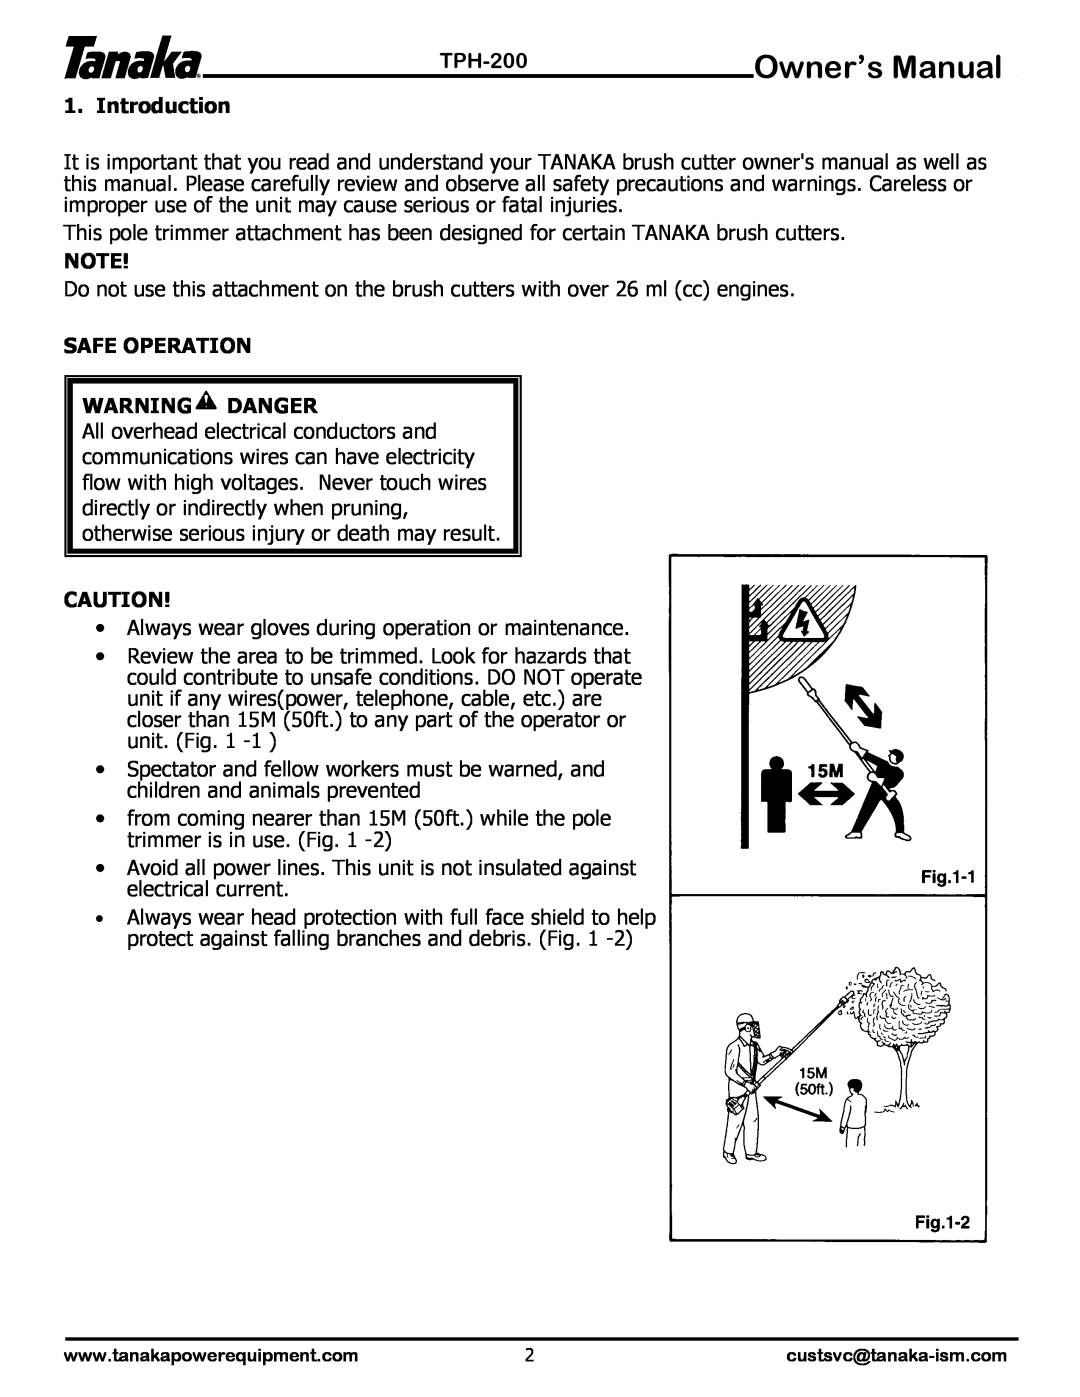 Tanaka TPH-200 manual Introduction, Safe Operation Warning Danger 